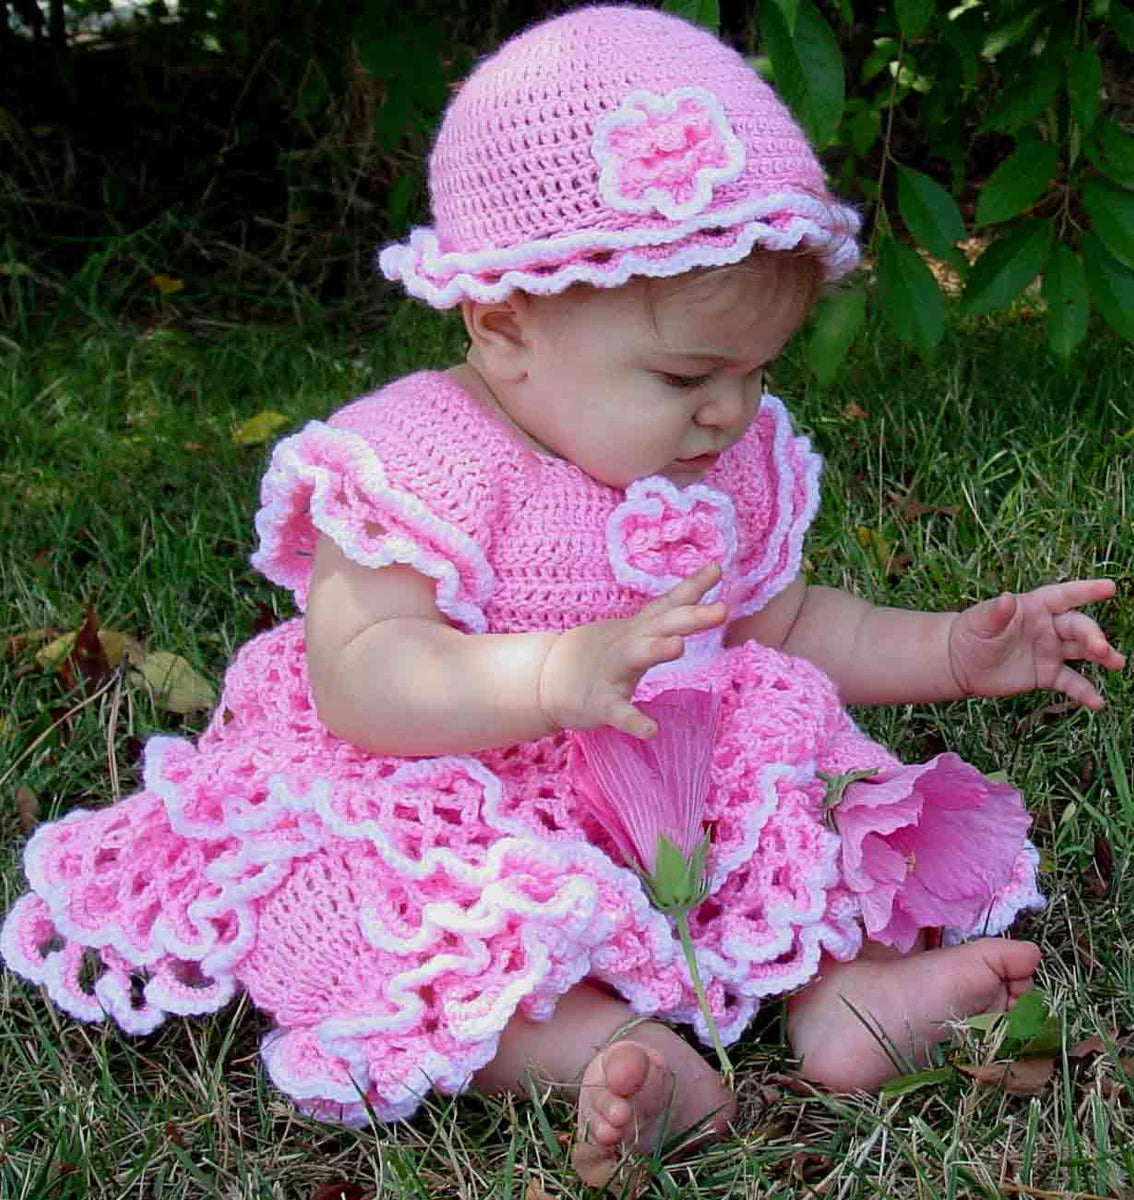 Ruffle Outfits For Babies - Photos Cantik